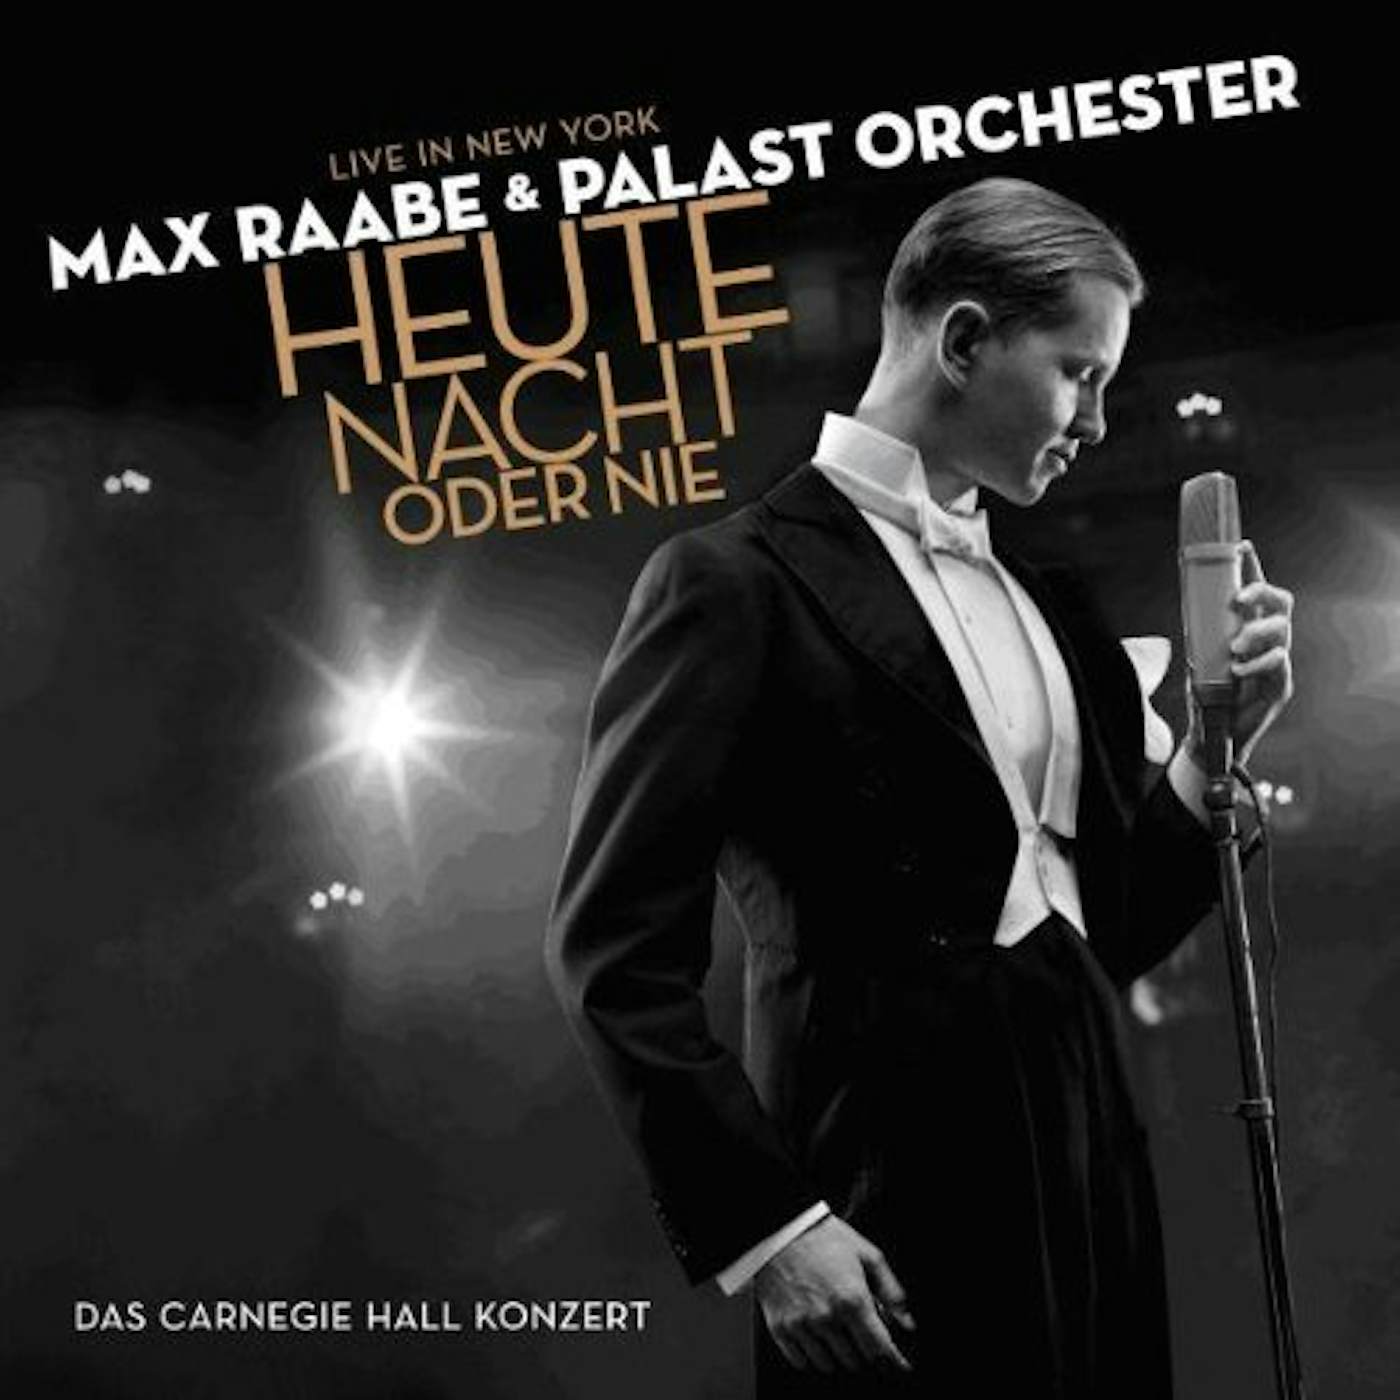 Max Raabe & Palast Orchester Heute Nacht oder nie Vinyl Record